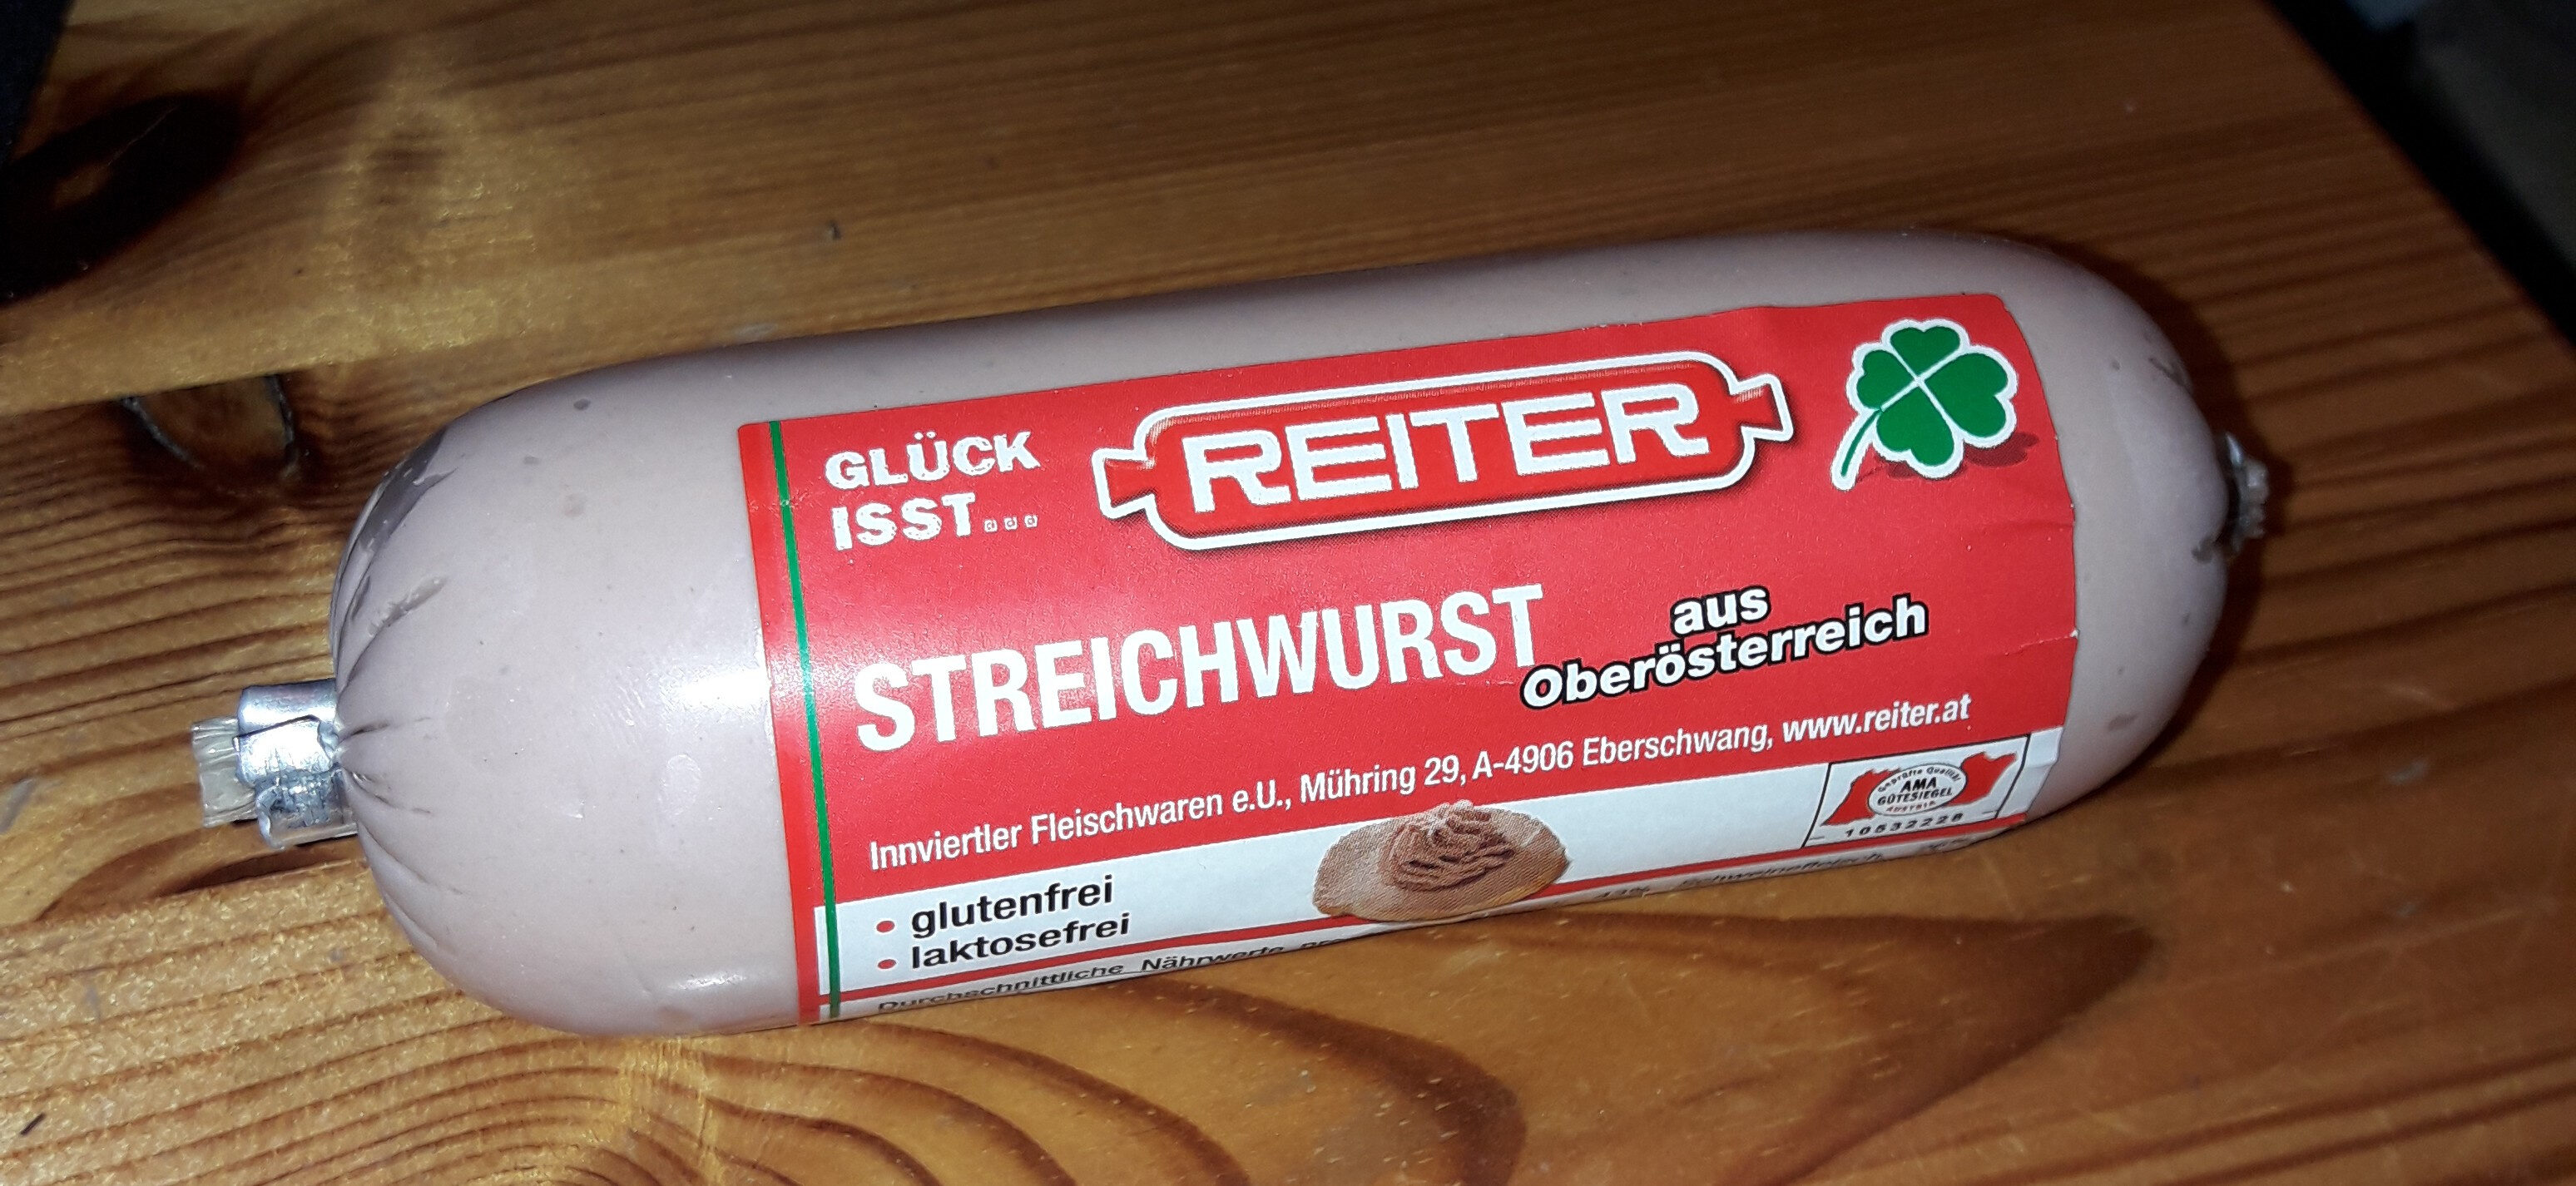 Streichwurst - Product - de